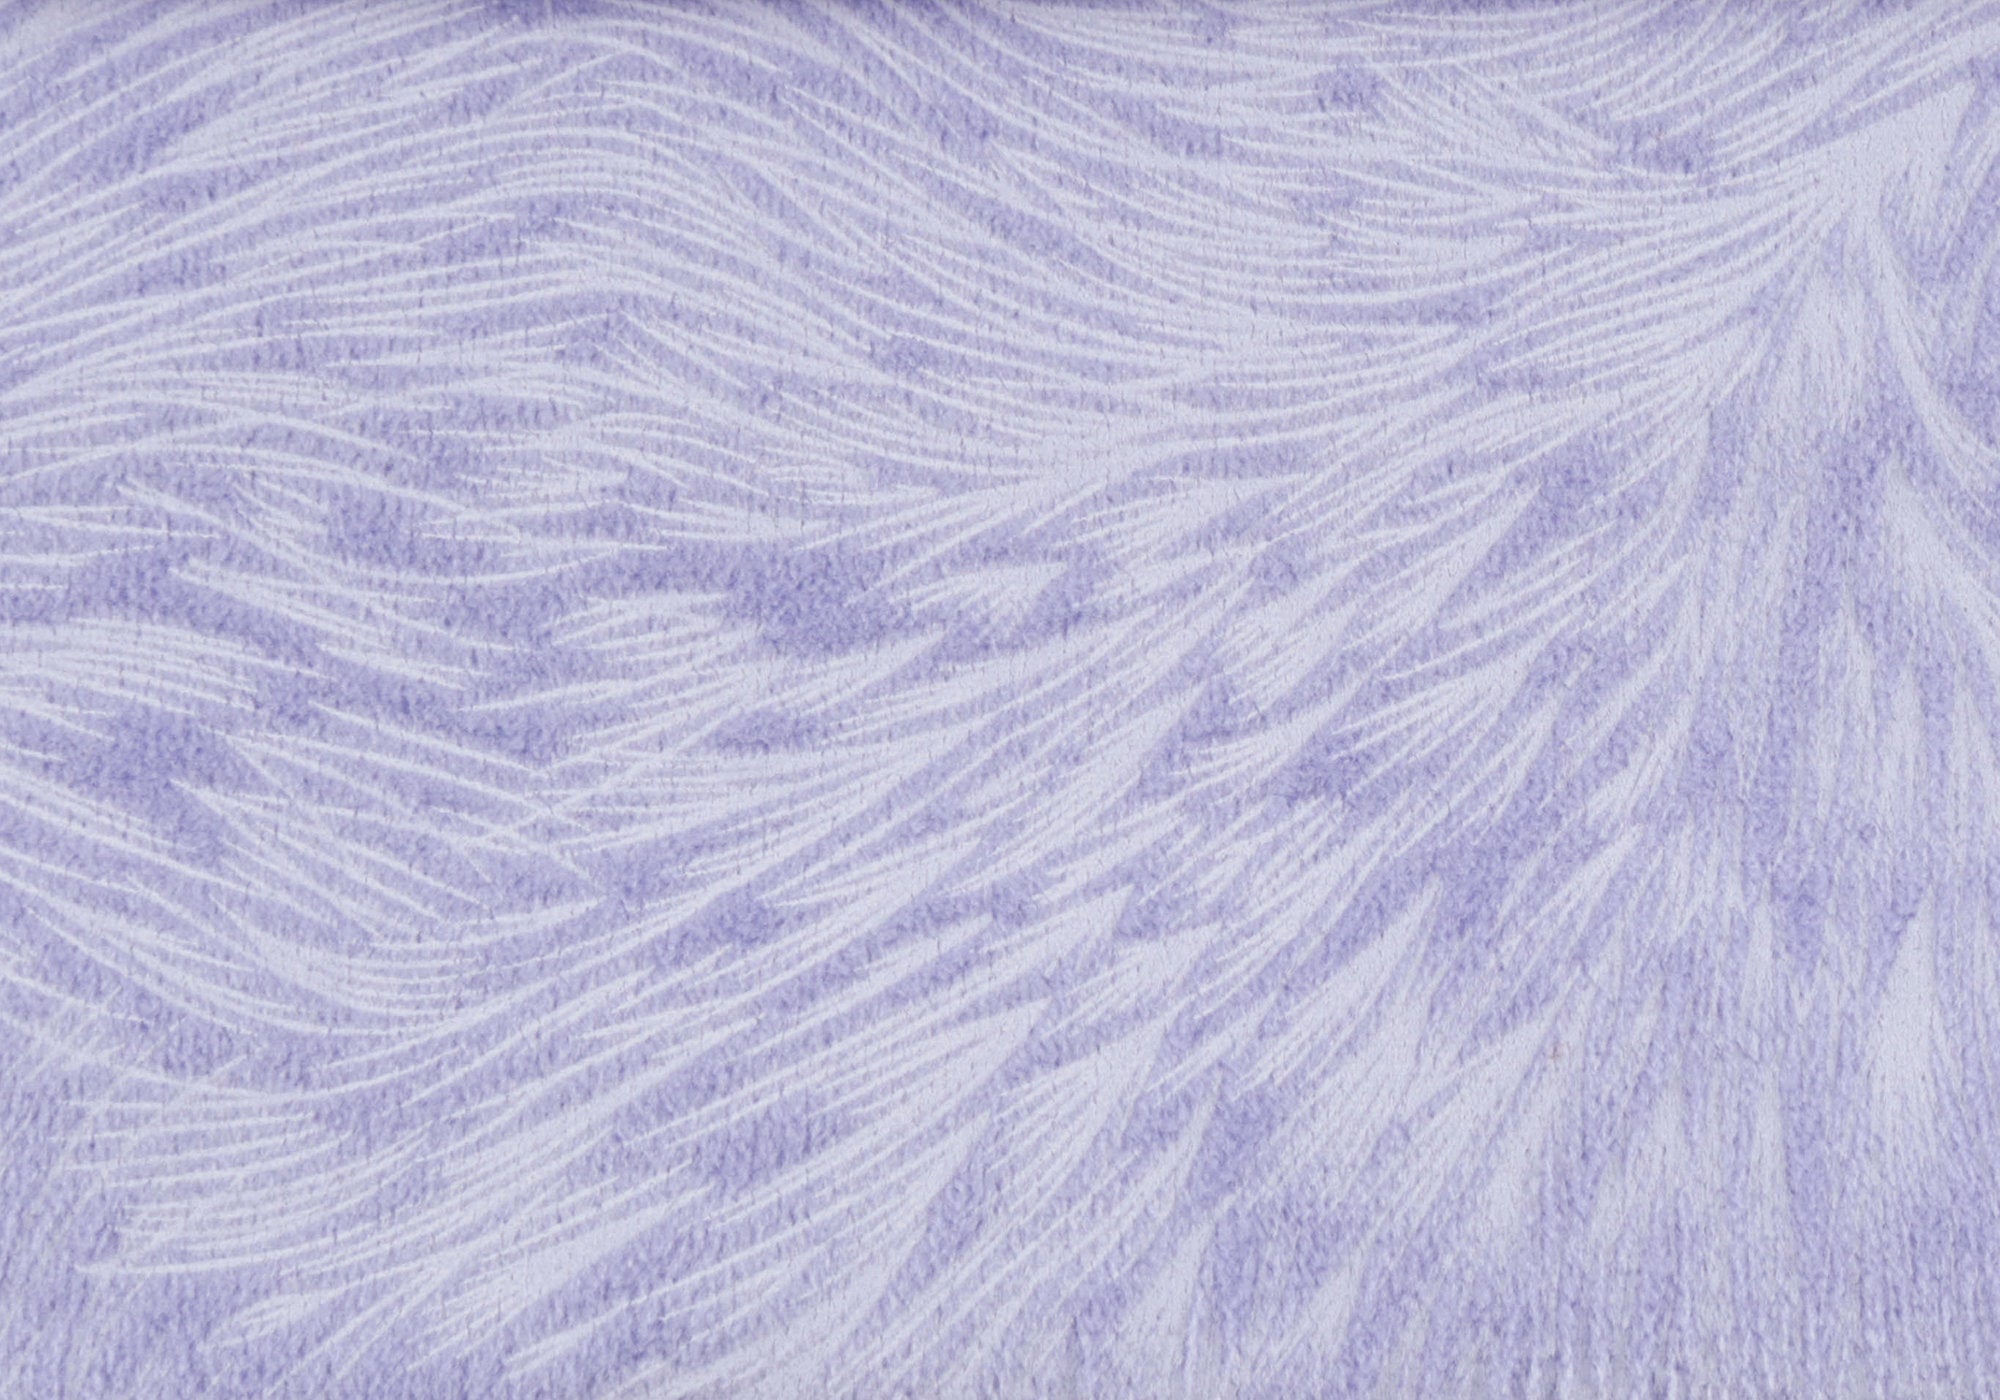 Pillow - 18X 18 / Light Purple Feathered Velvet / 1Pc